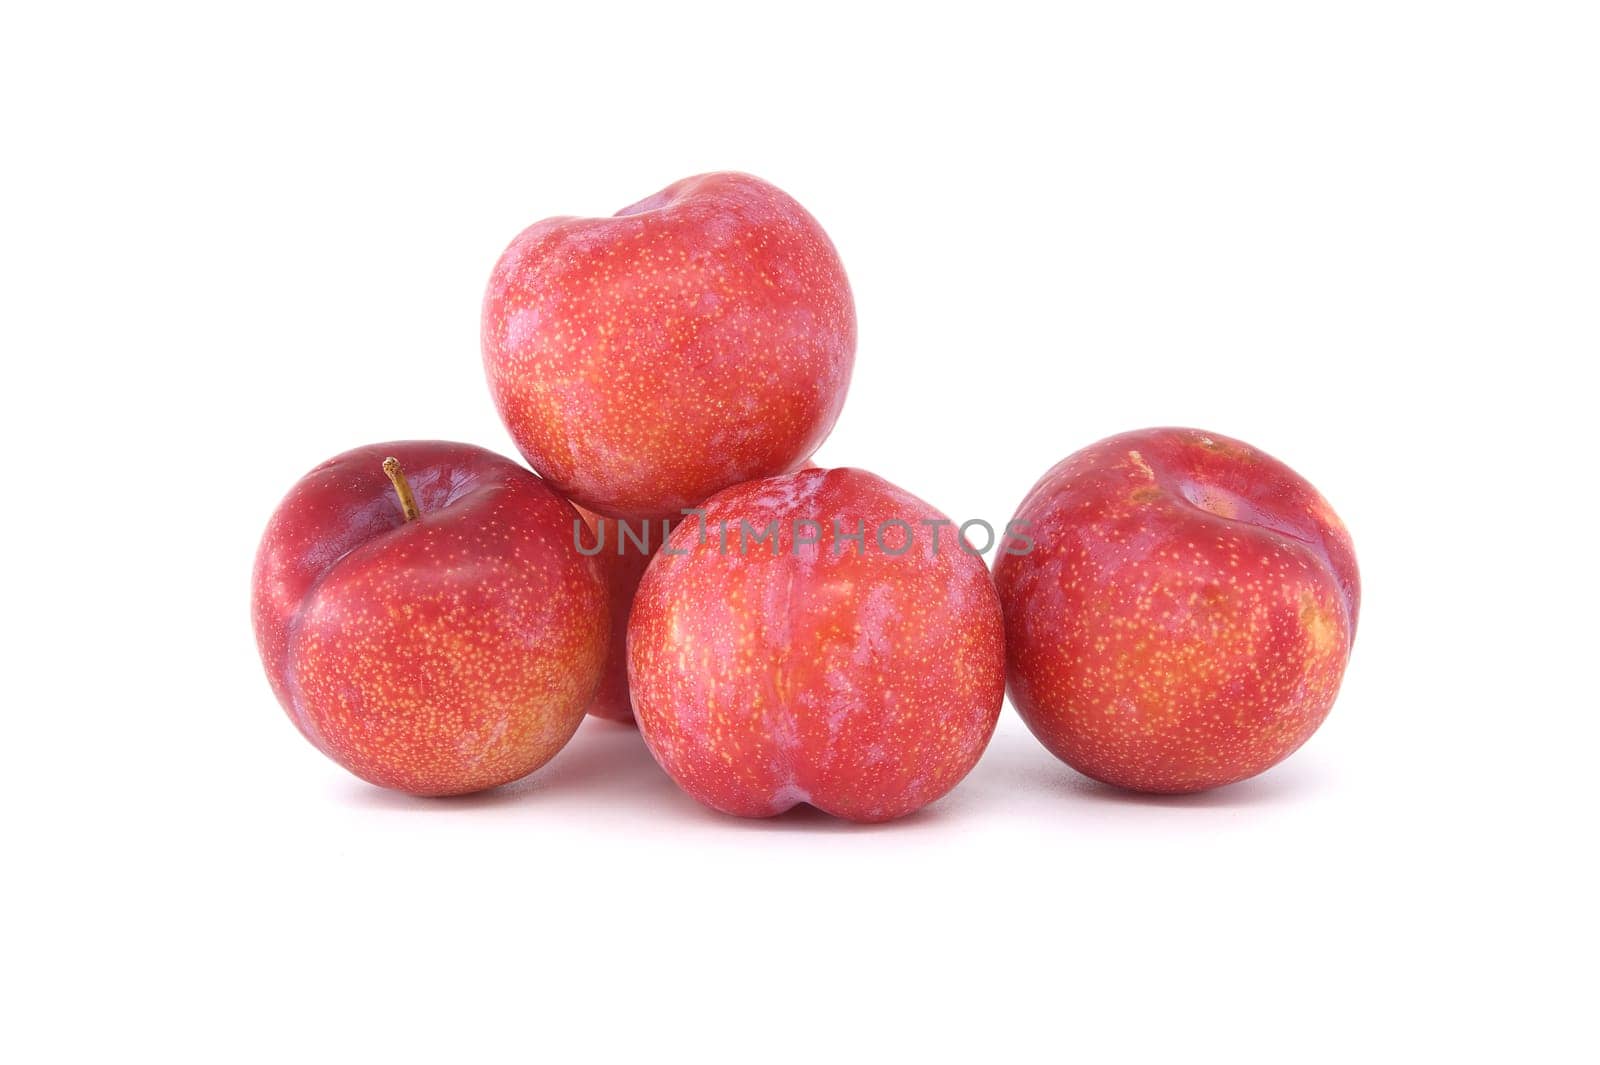 Four crimson plums arranged against a white background